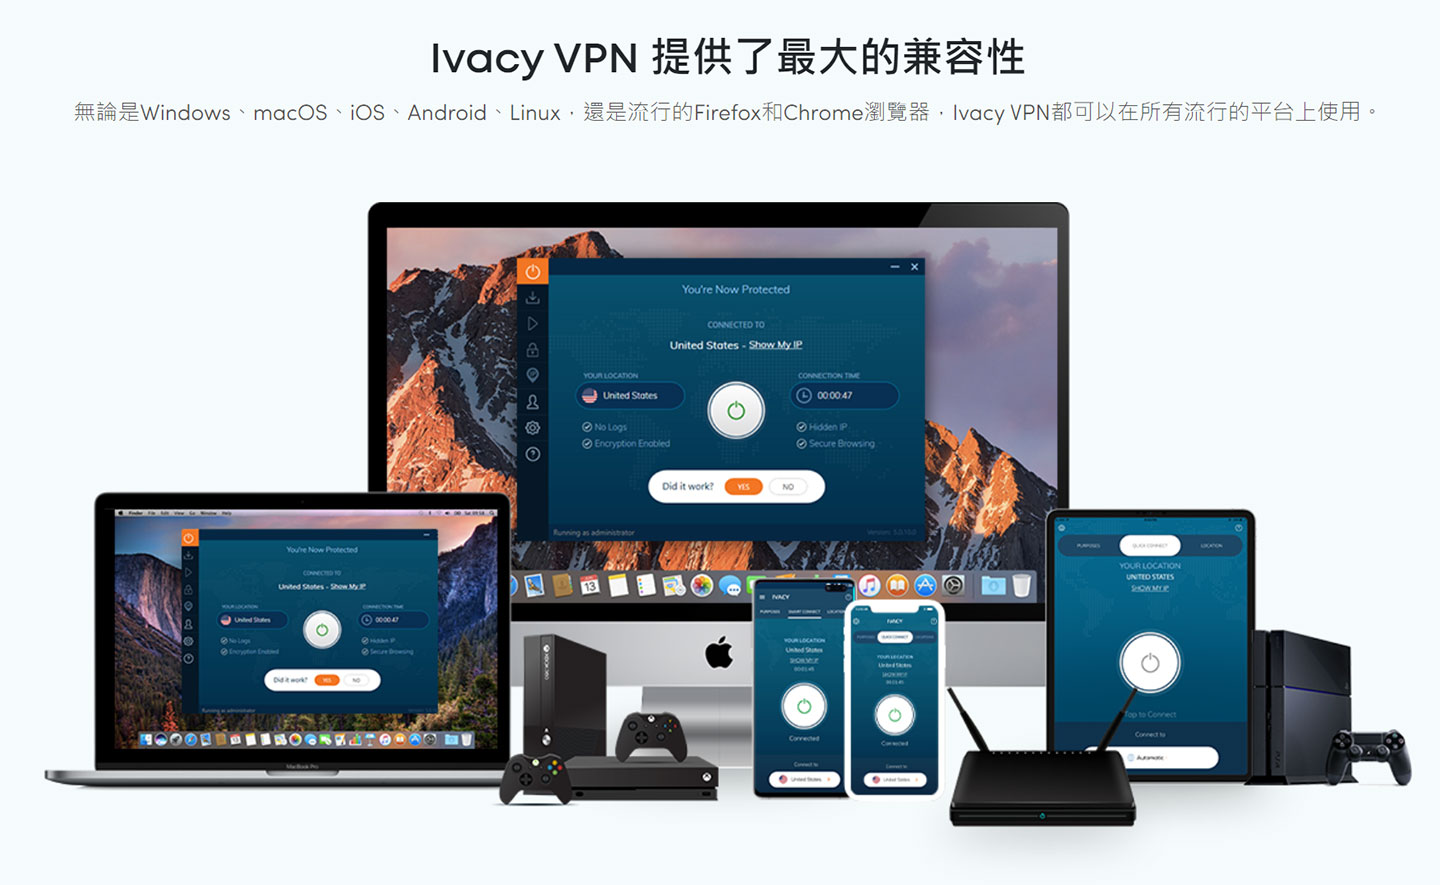 Ivacy VPN 提供多平台的完整支援，包括電腦、行動裝置、遊樂器…。